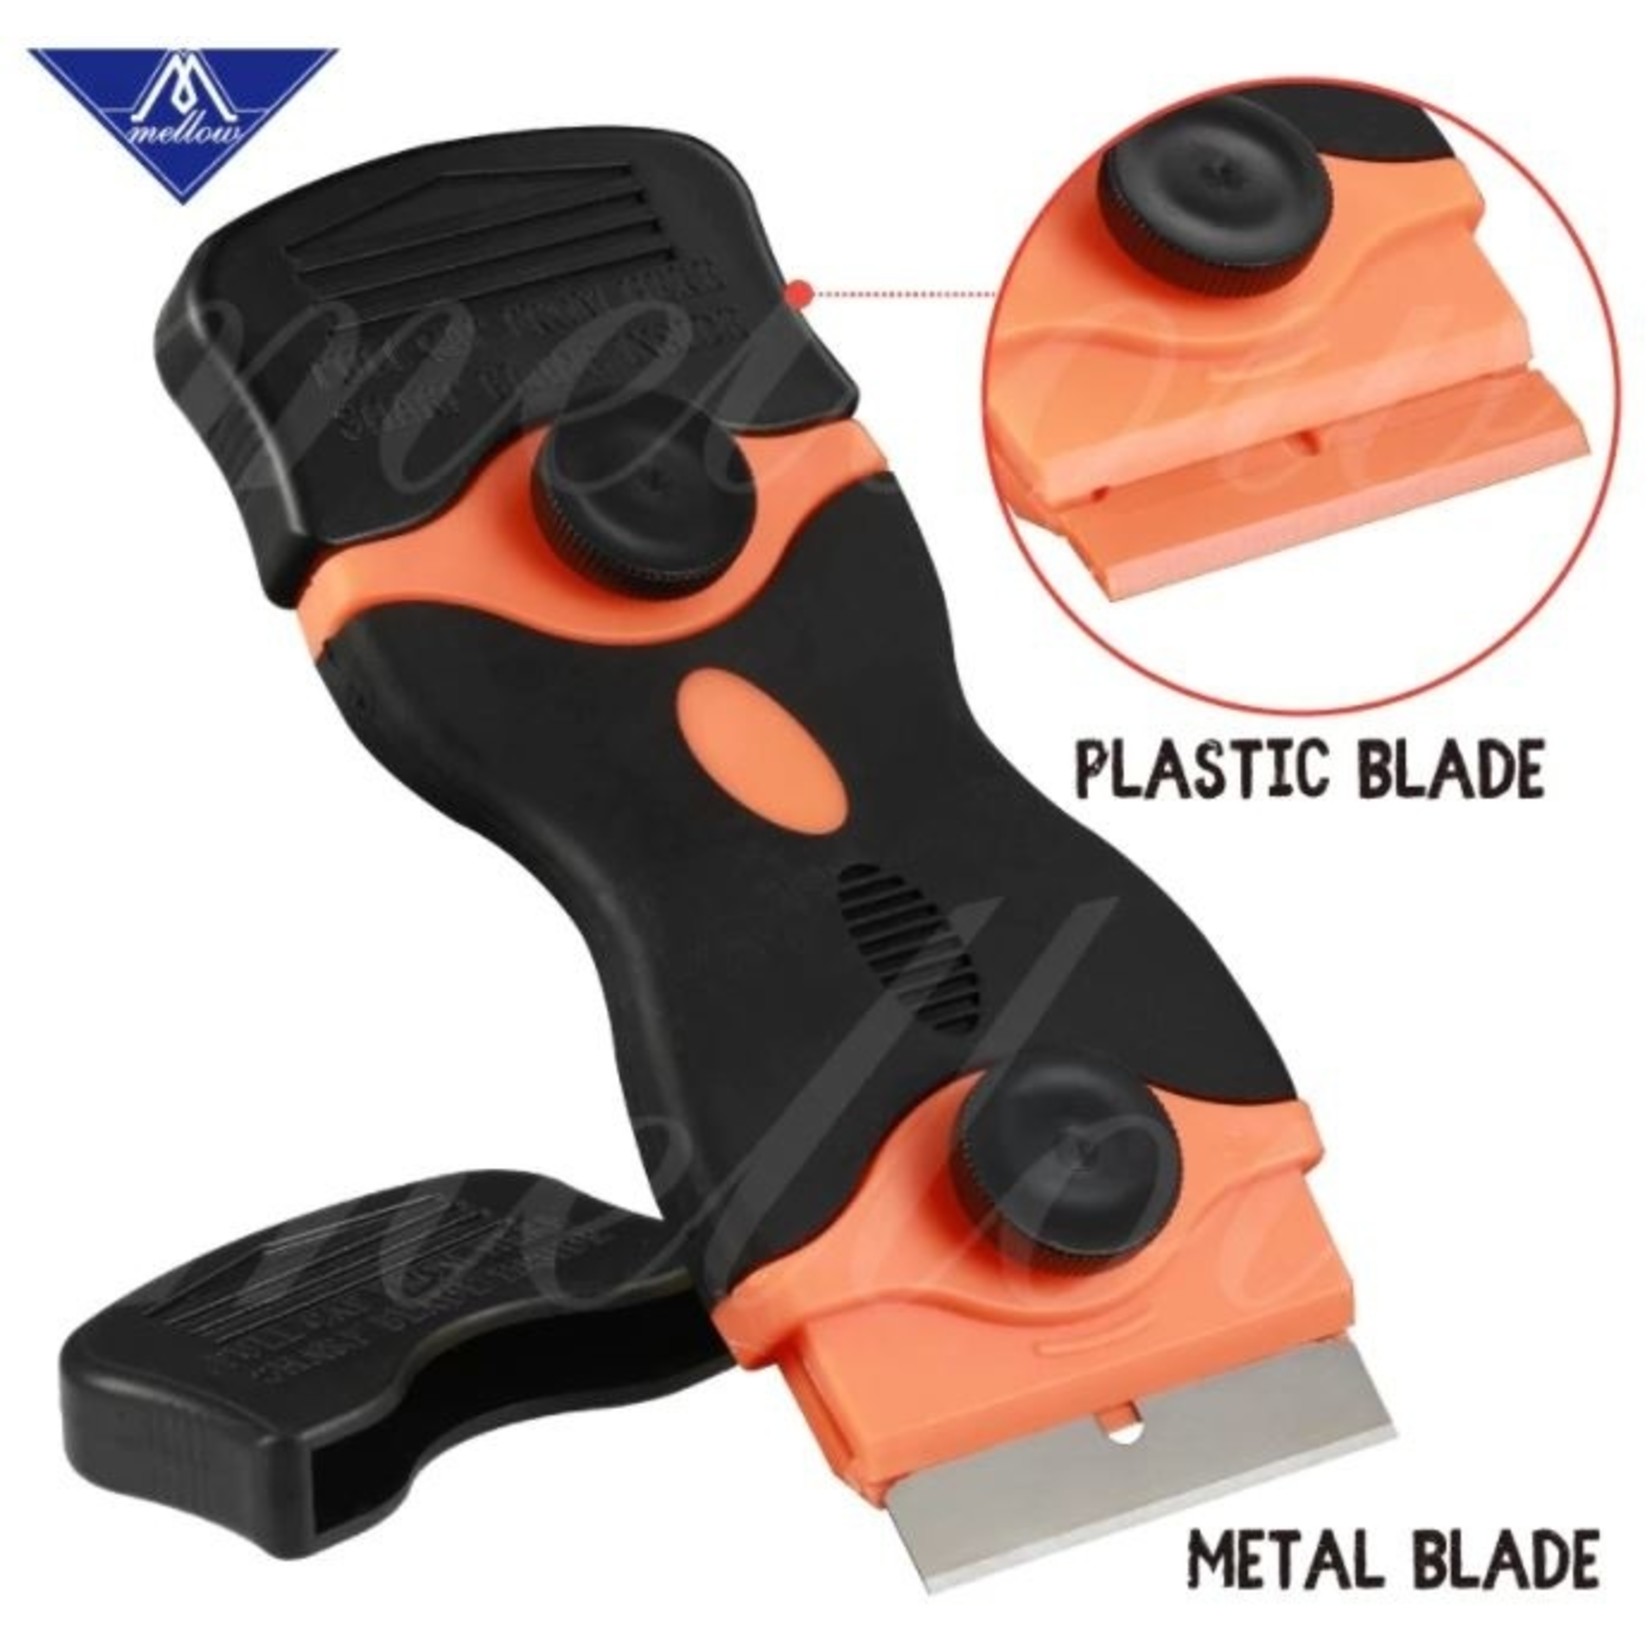 Double bladed scraper - Metal or Plastic